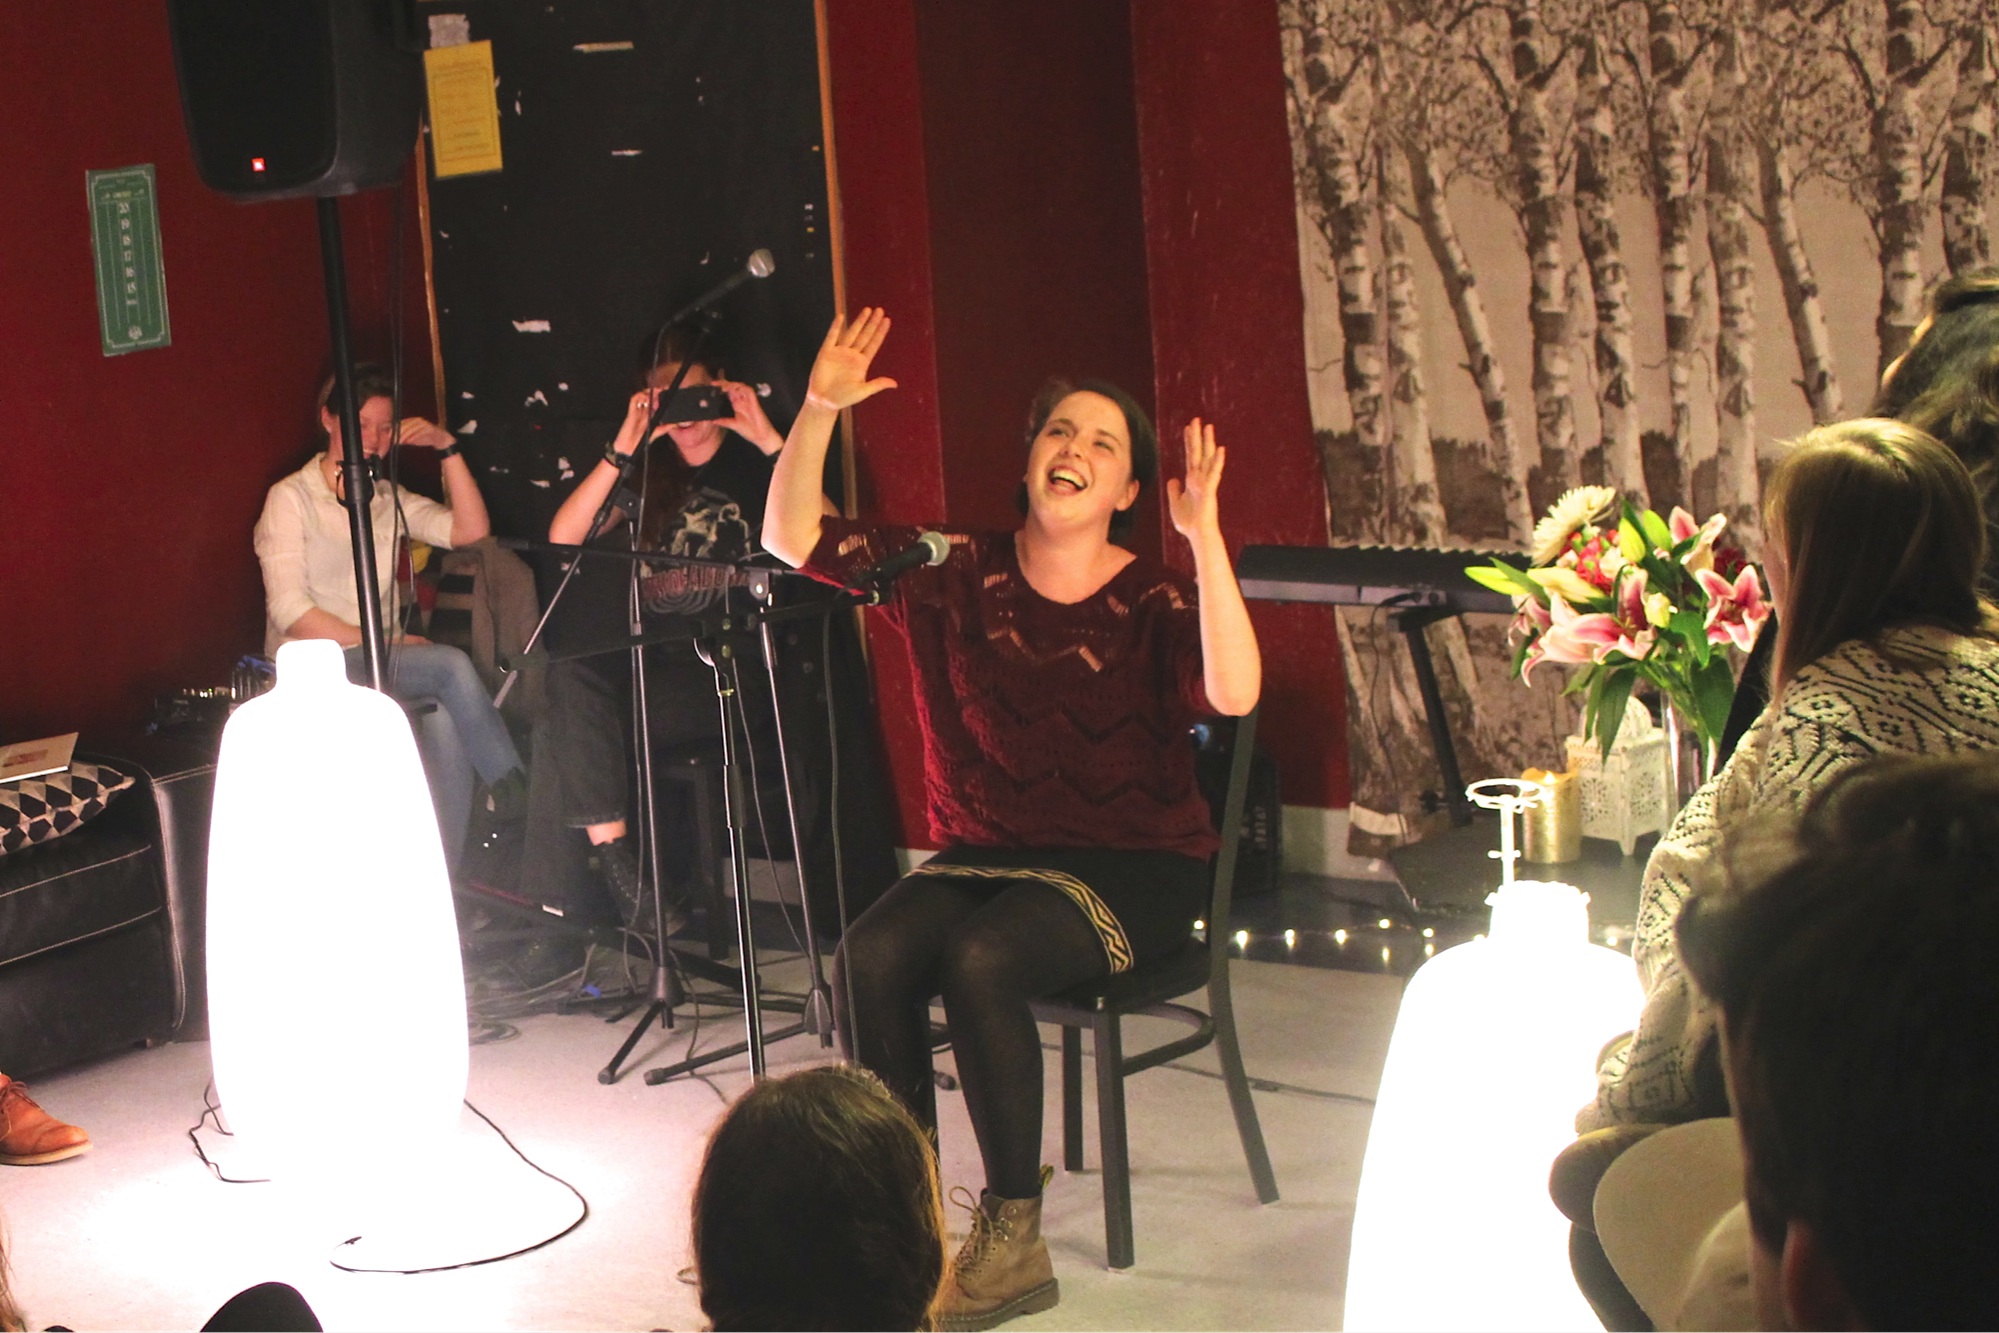 Megan Gilbs leads a rousing, sing-along rendition of Bohemian Rhapsody